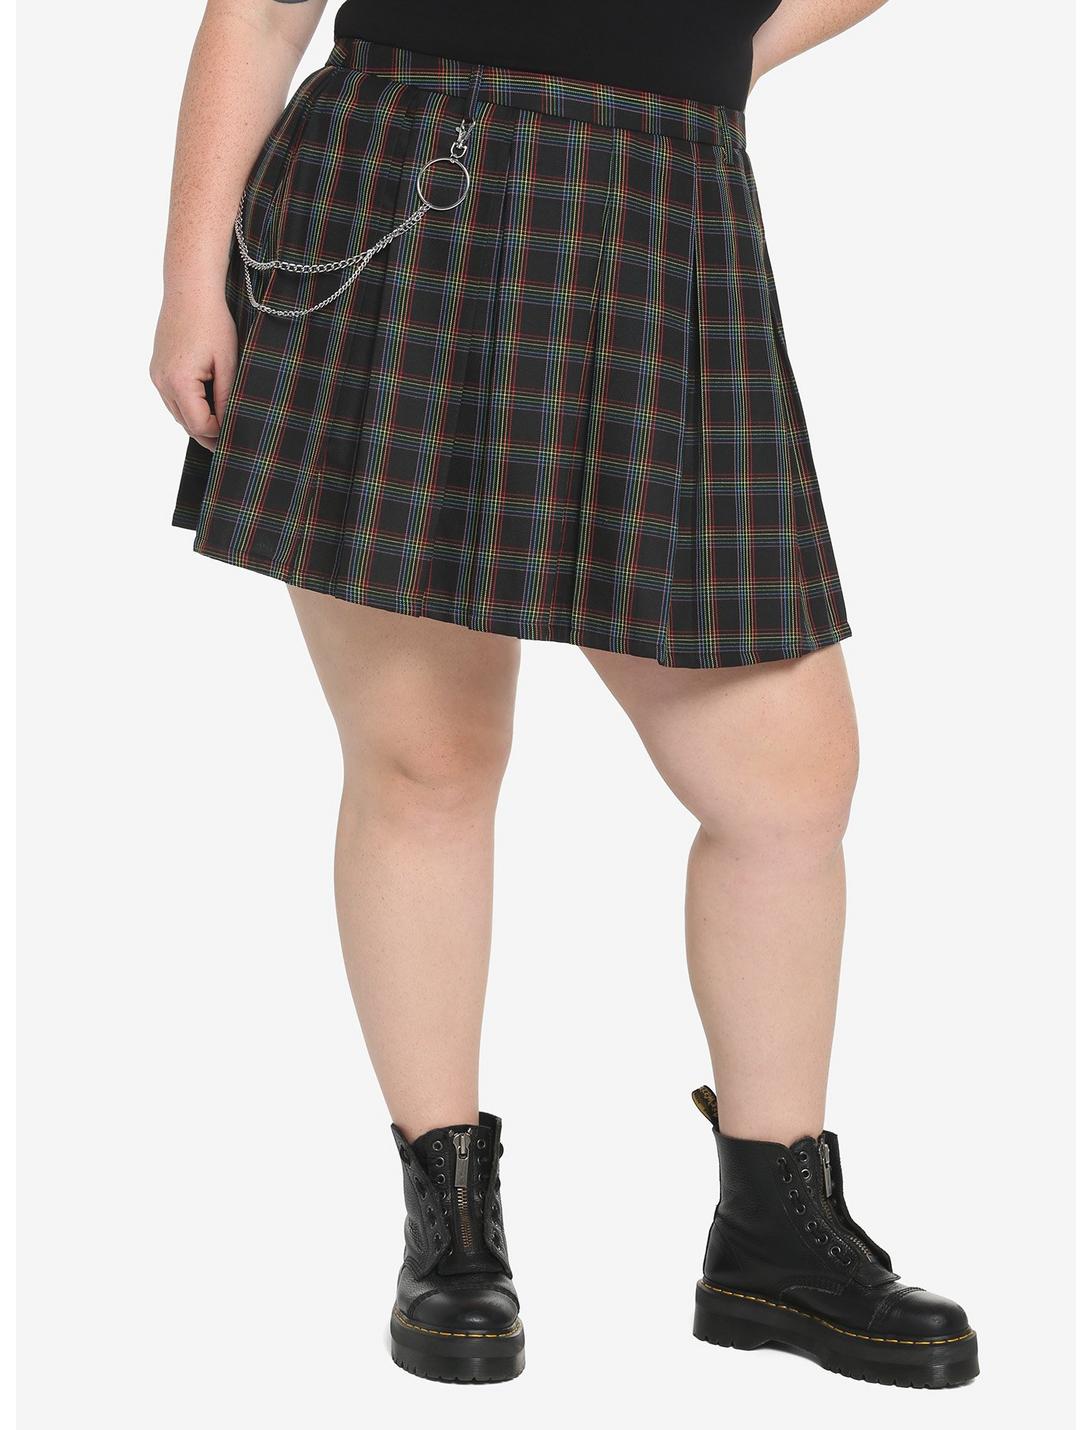 Rainbow Grid O-Chain Pleated Skirt Plus Size, PLAID-RAINBOW, hi-res